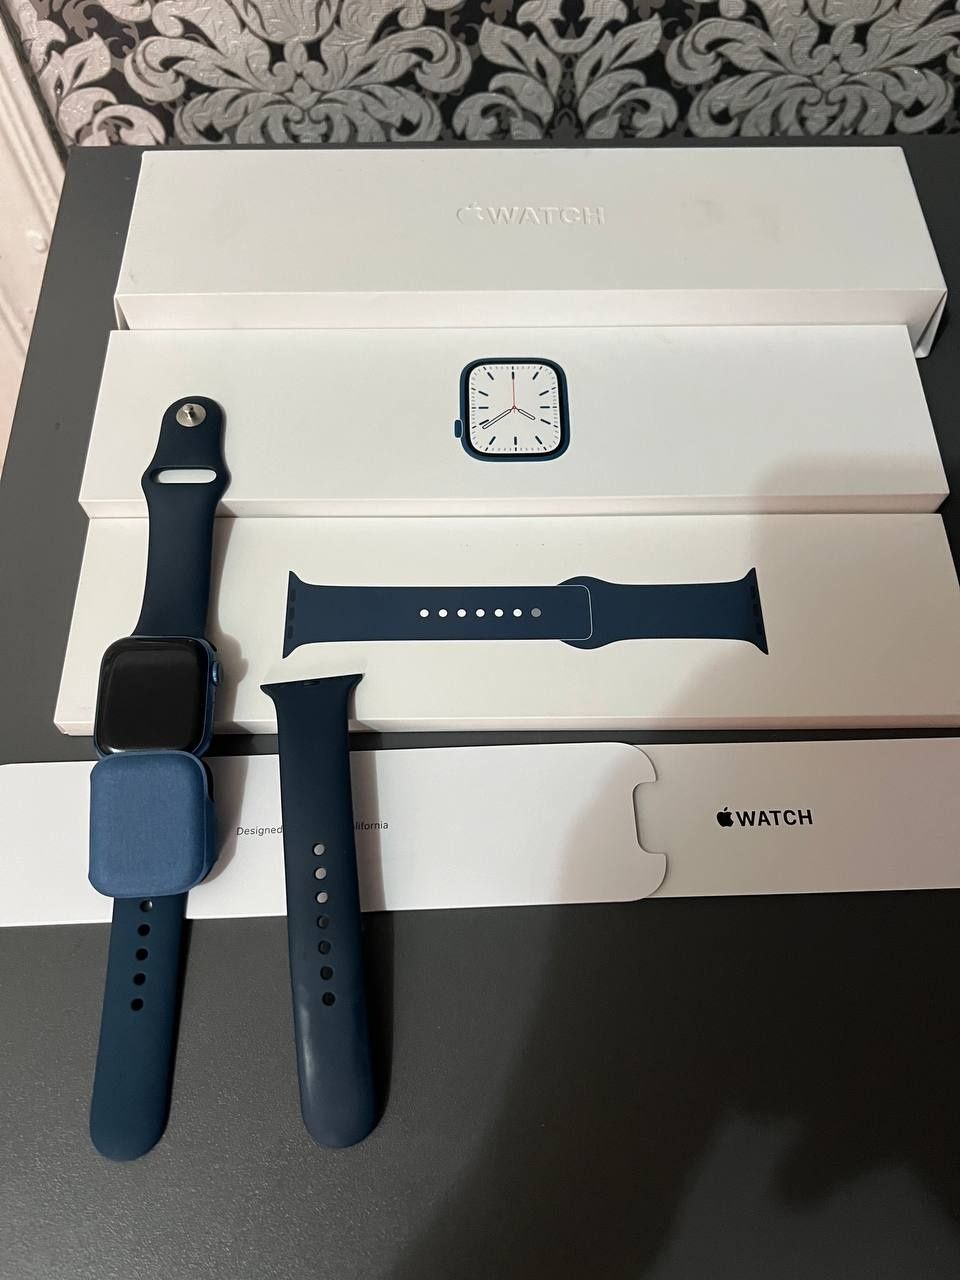 MKN13HB/A Apple Watch Series 7 41mm Blue Alu Abyss Blue Sp Band GPS
De